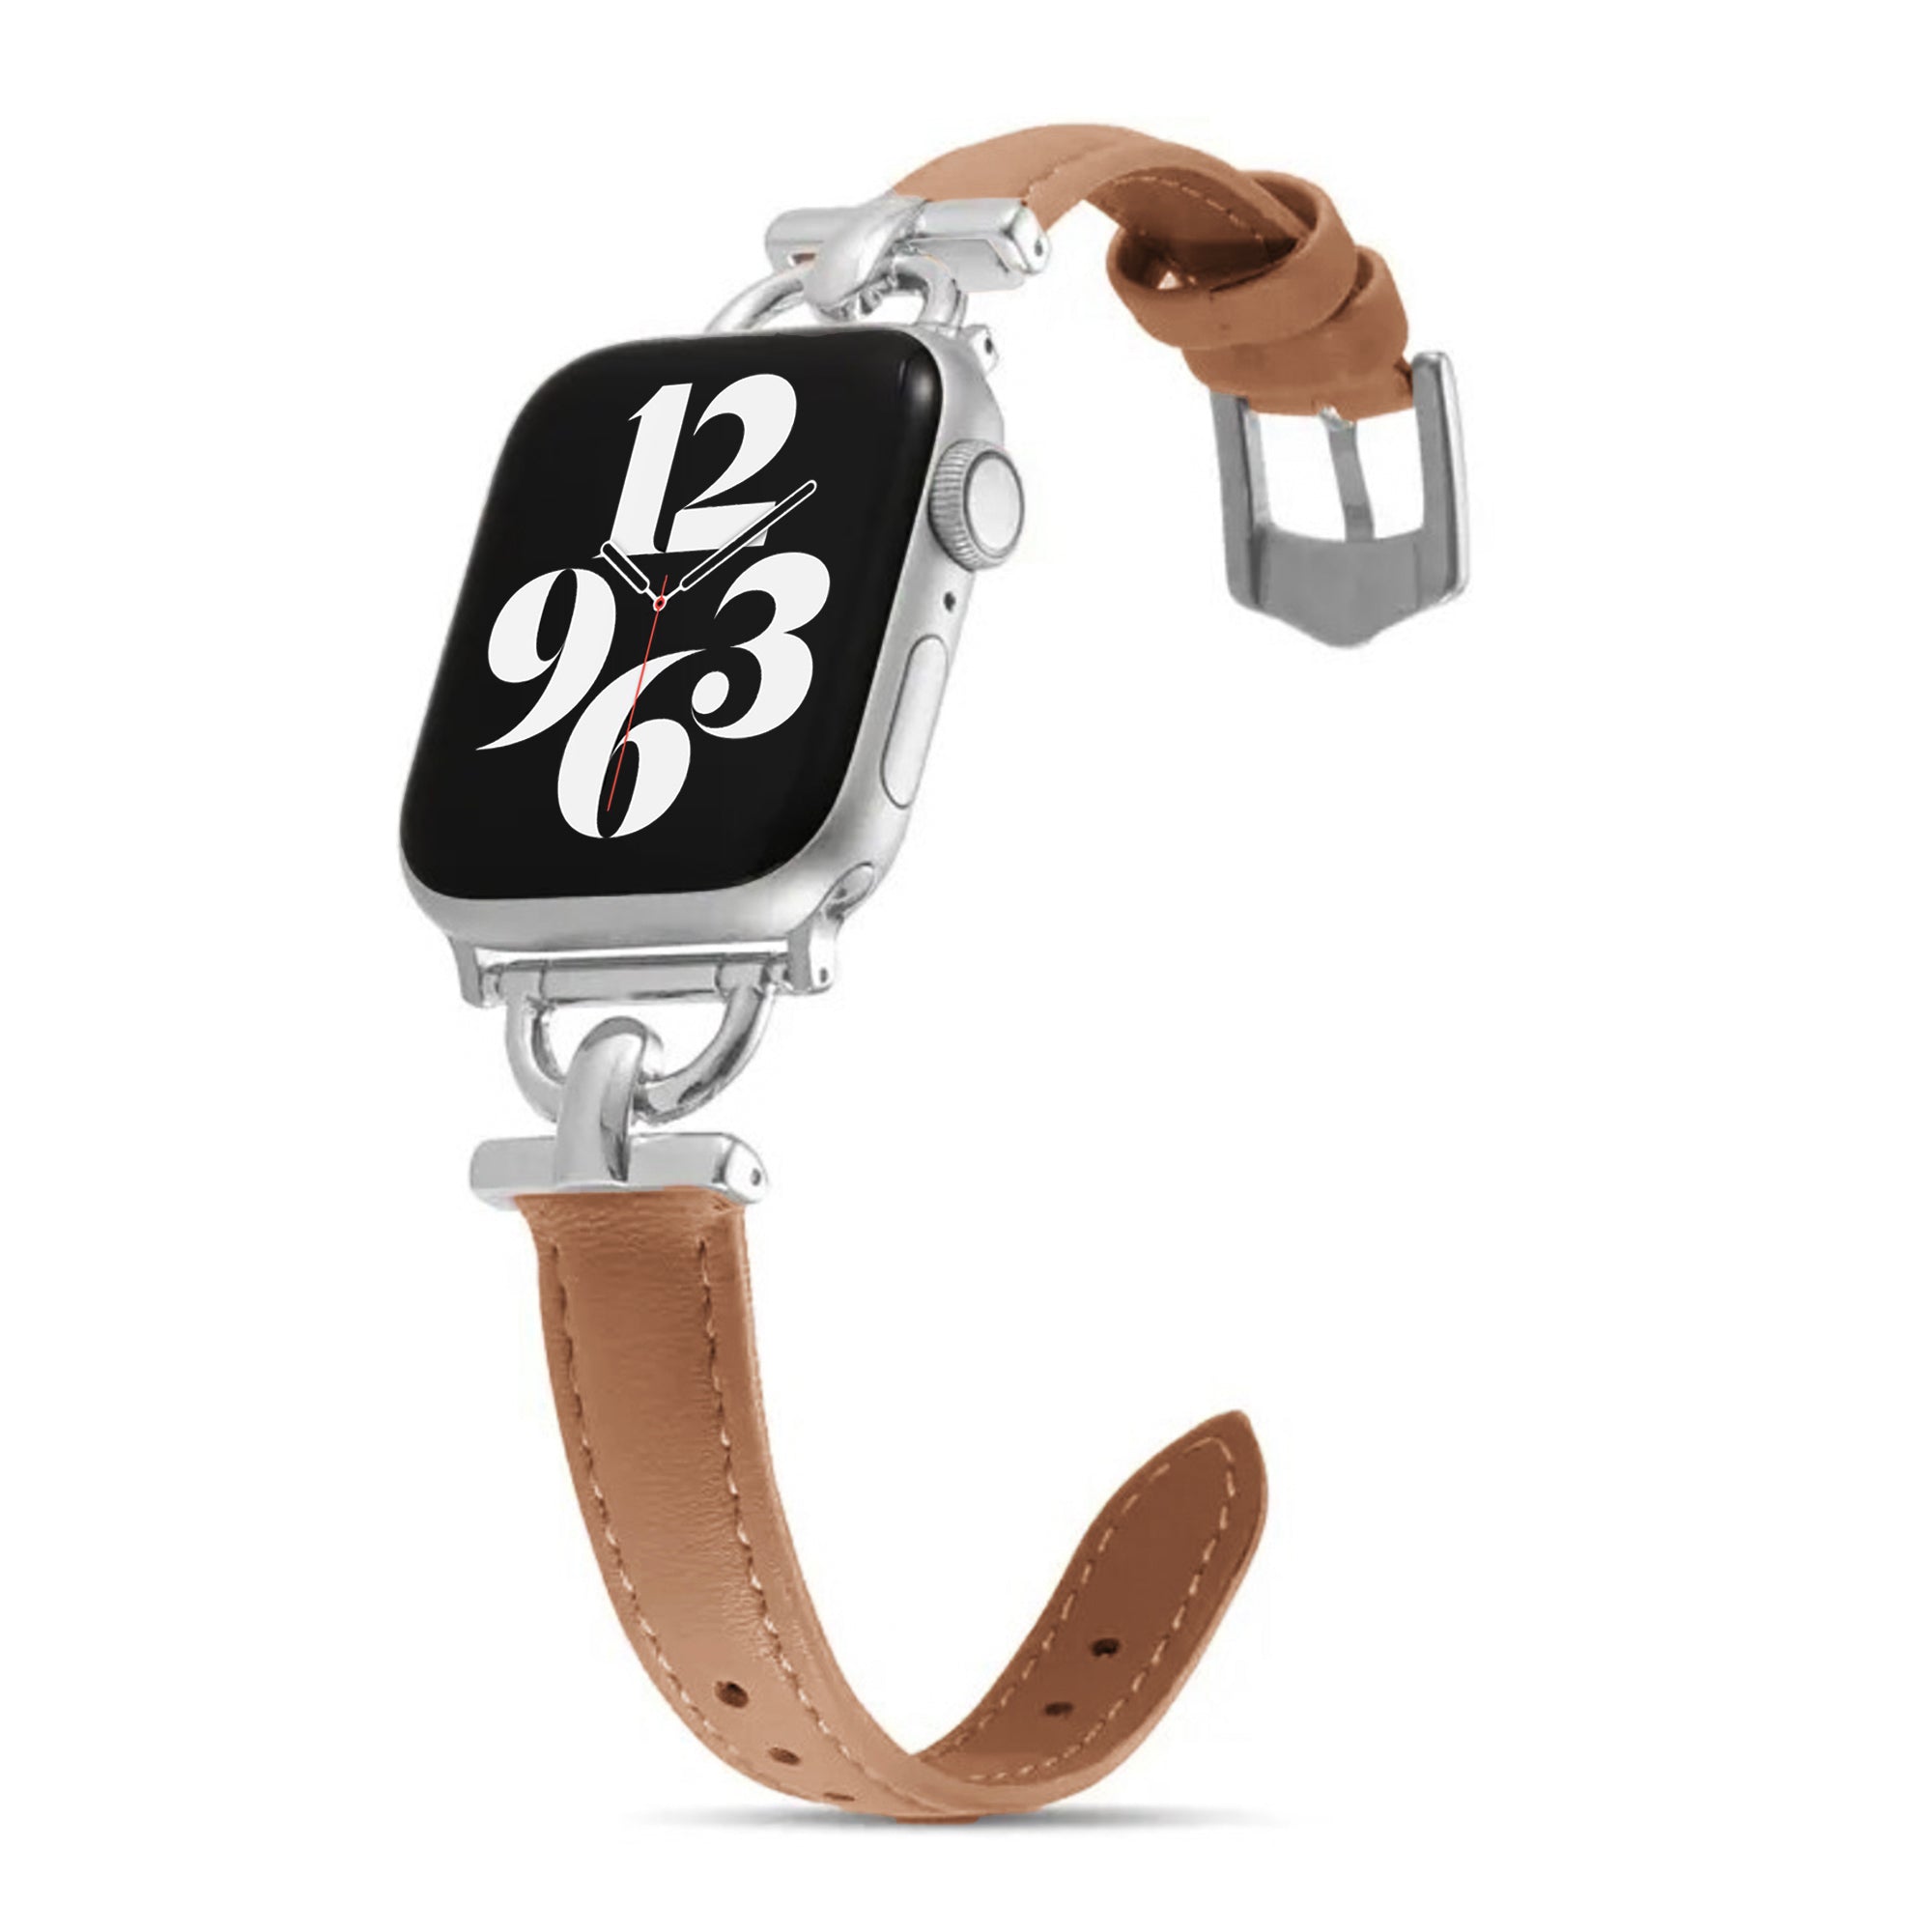 Apple Watch schmales Lederarmband – braun